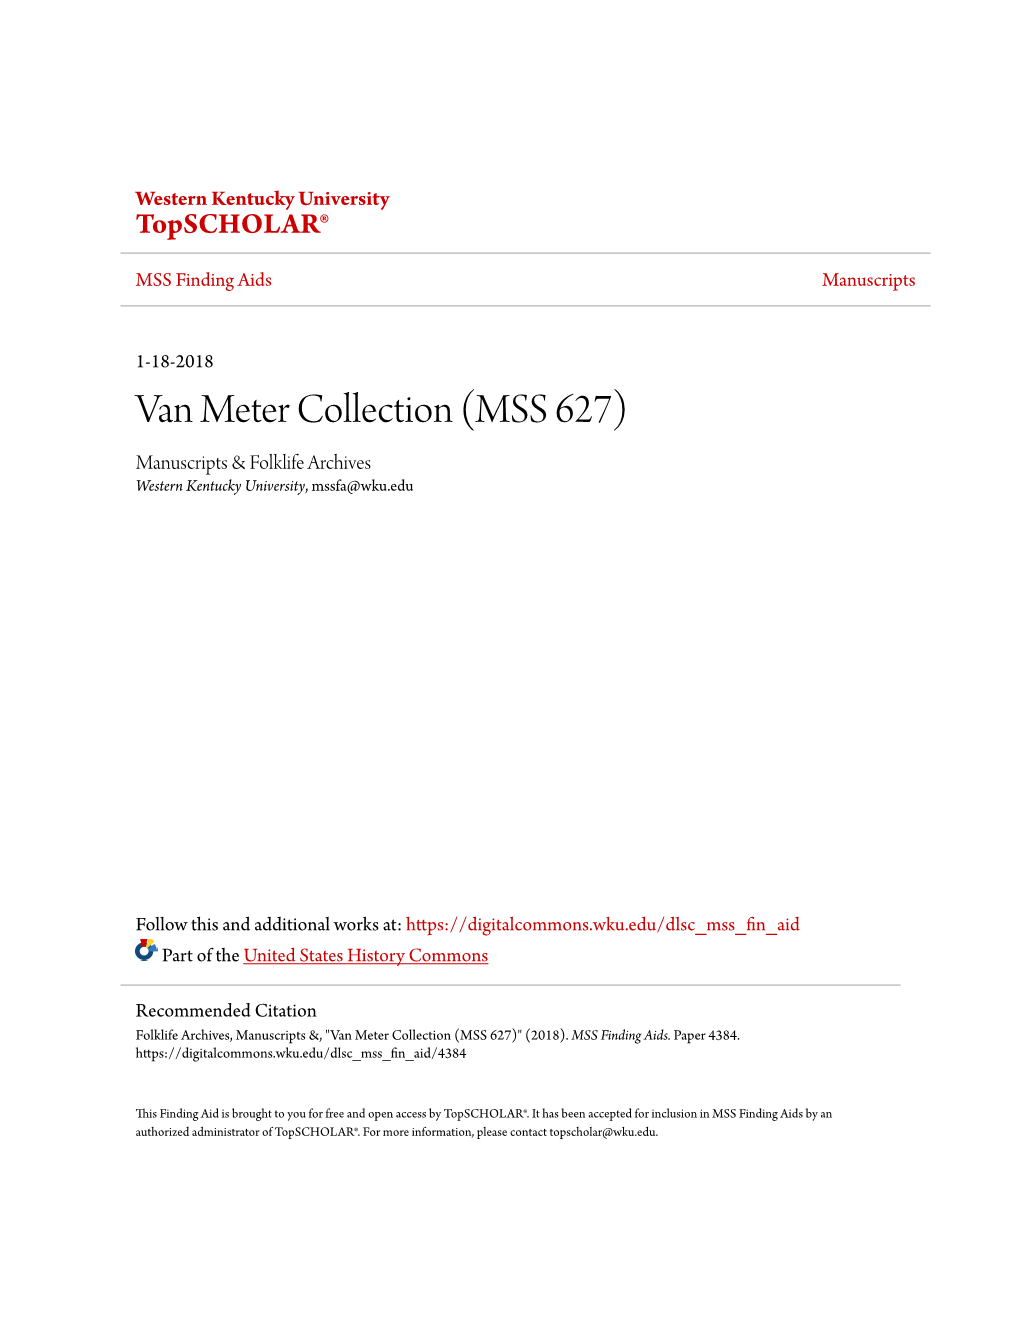 Van Meter Collection (MSS 627) Manuscripts & Folklife Archives Western Kentucky University, Mssfa@Wku.Edu